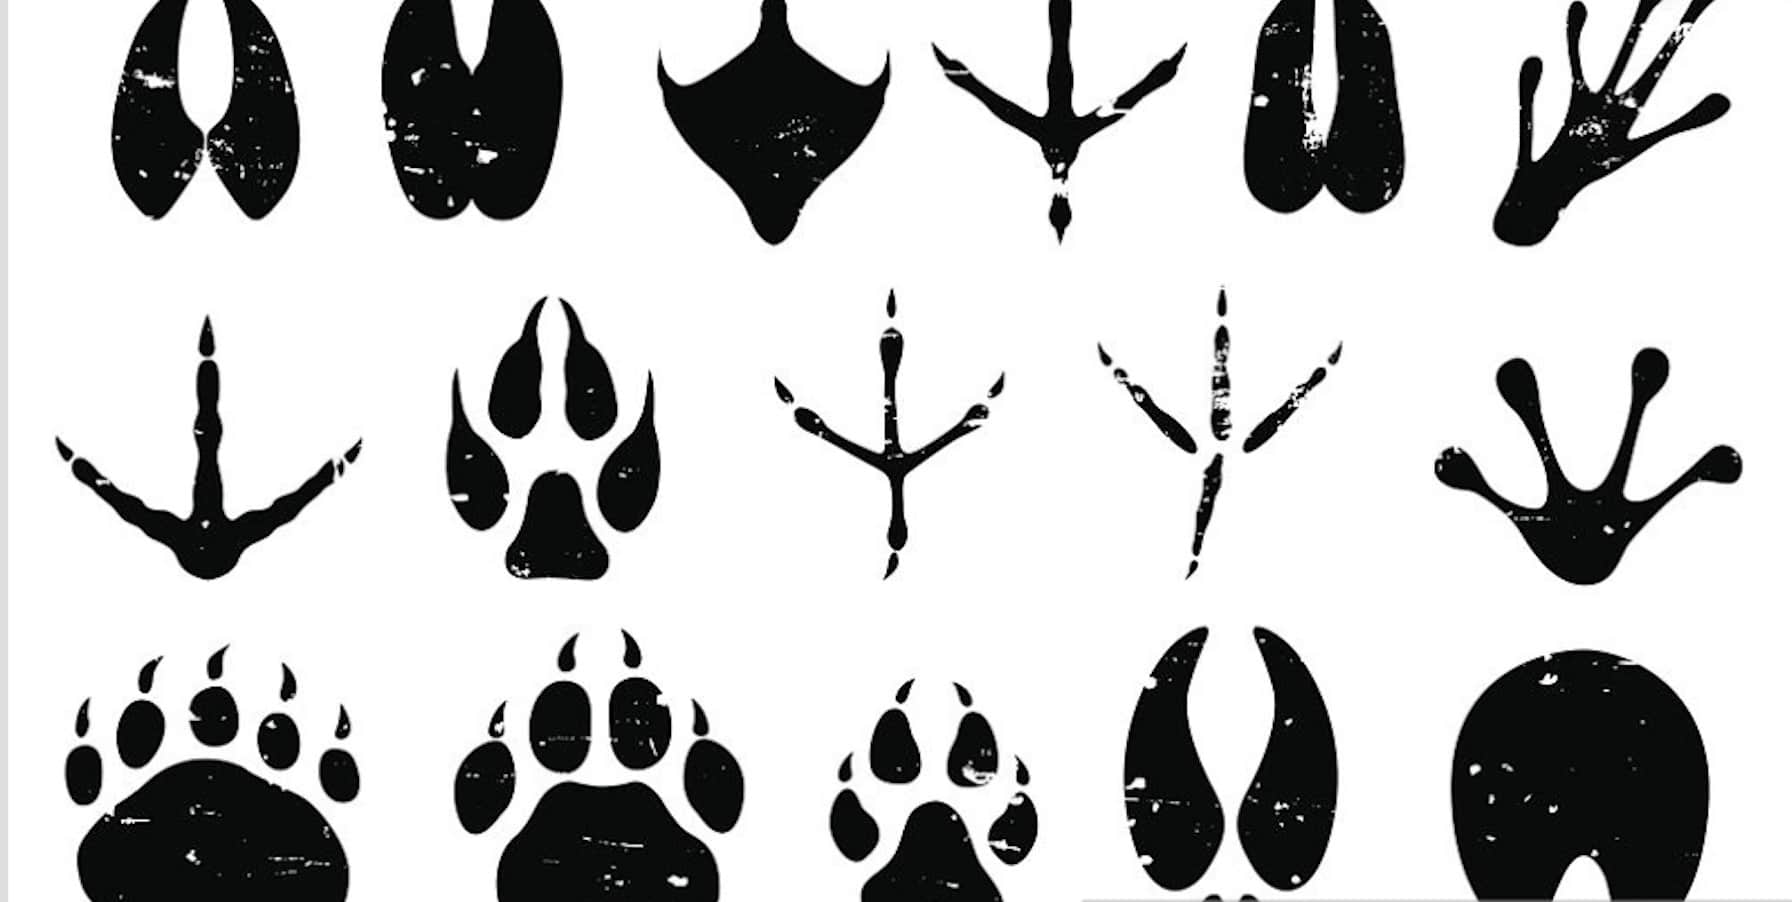 tracks in snow identify animal